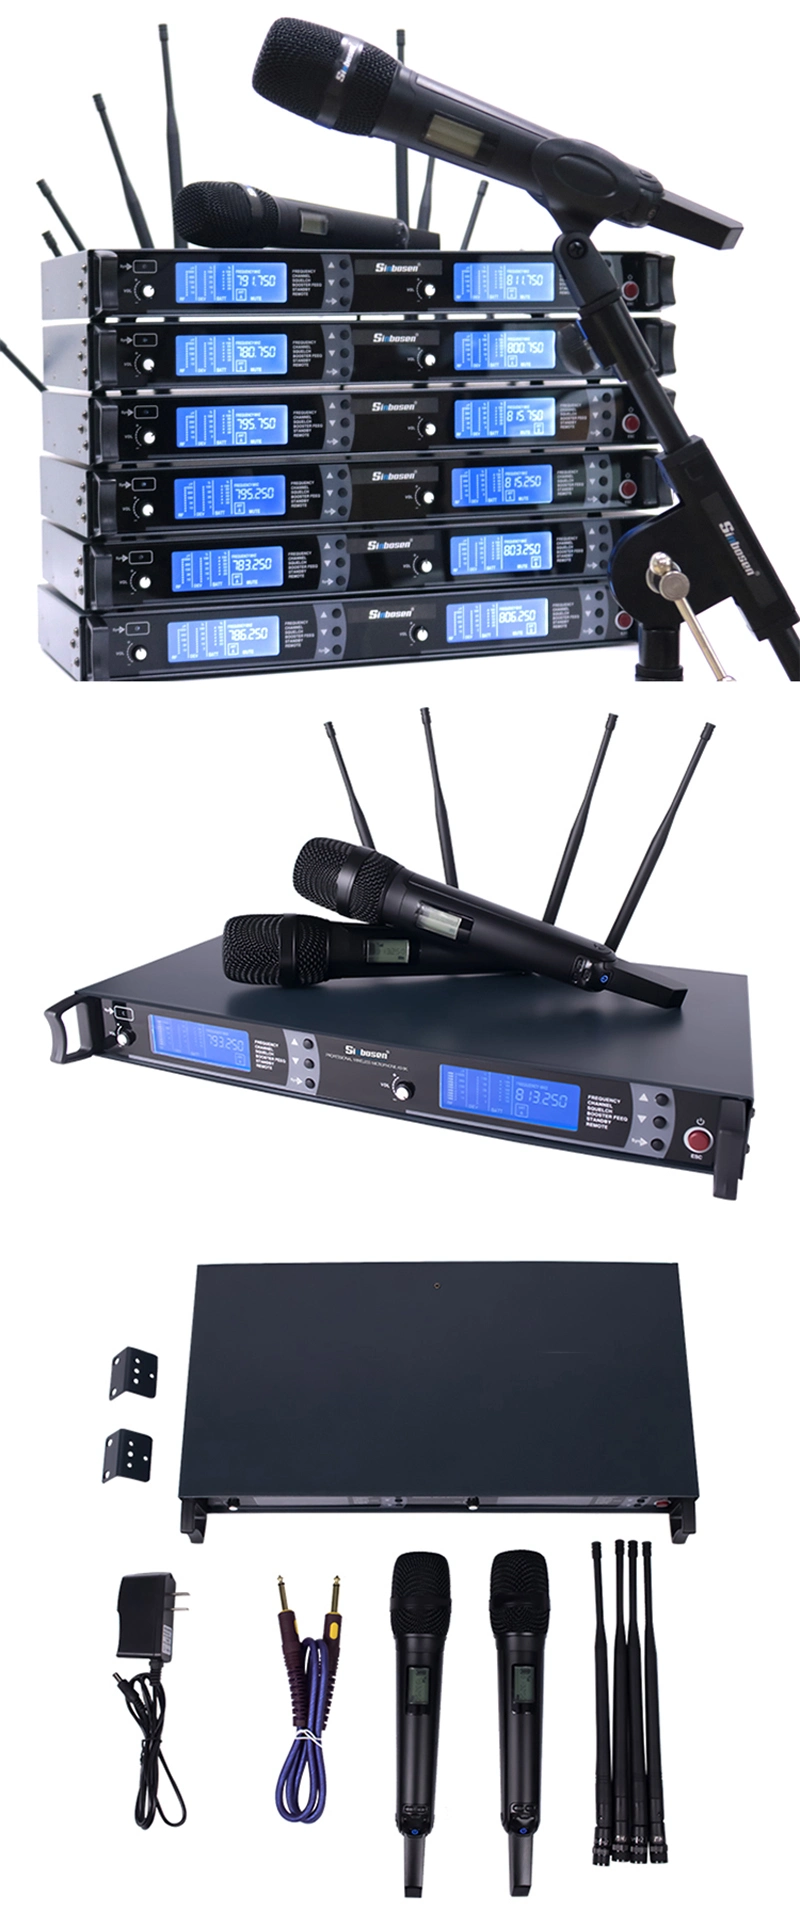 Sinbosen Wireless Microphone System Skm9000 UHF Professional Handheld Wireless Microphone